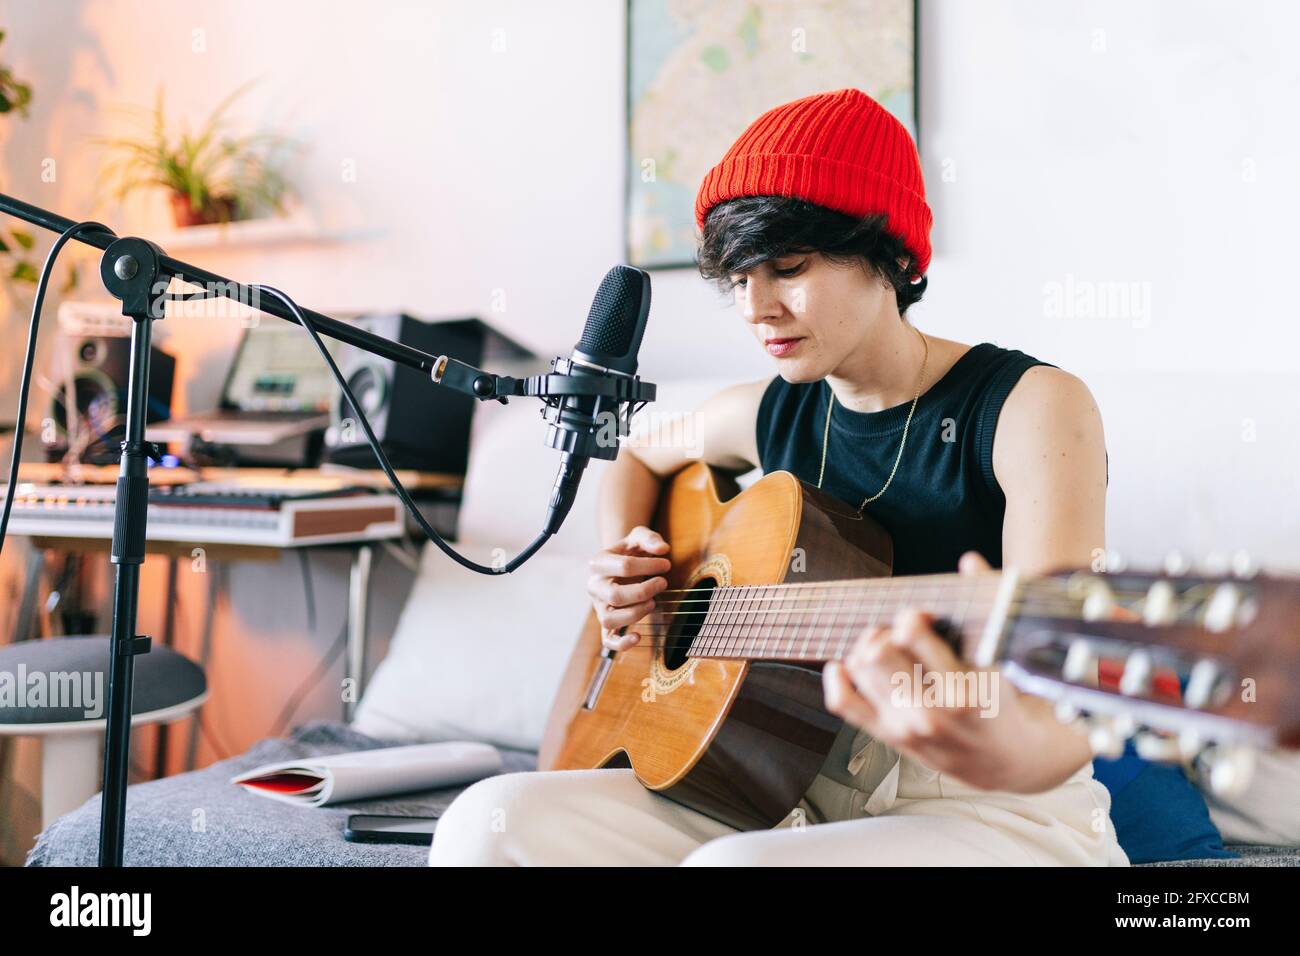 Female guitarist wearing knit hat while playing guitar at studio Stock Photo